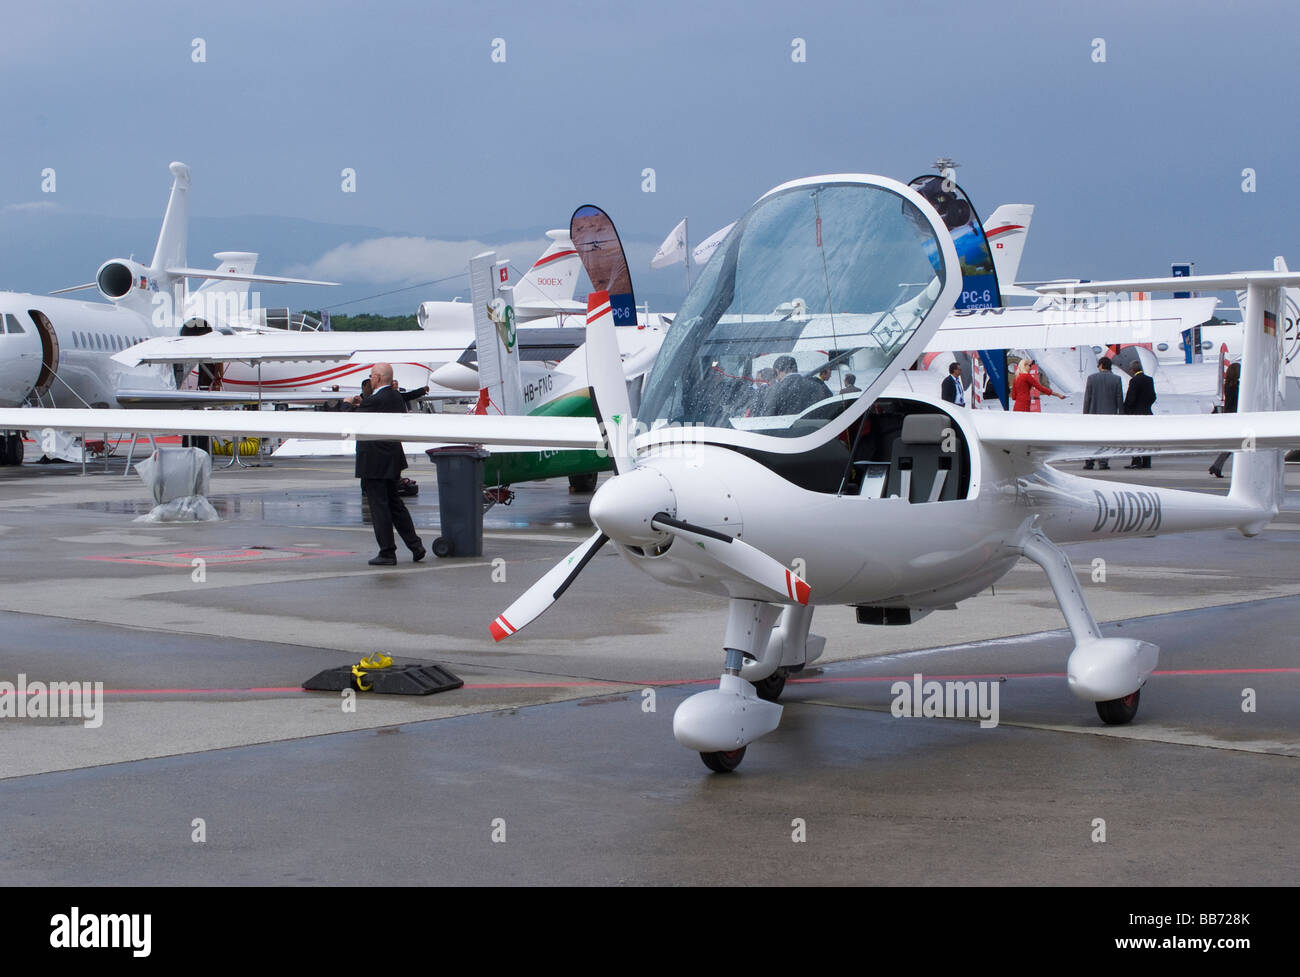 Motorised Glider and Corporate Business Jets at Ebace Trade Show Geneva Airport Switzerland Geneve Suisse Stock Photo